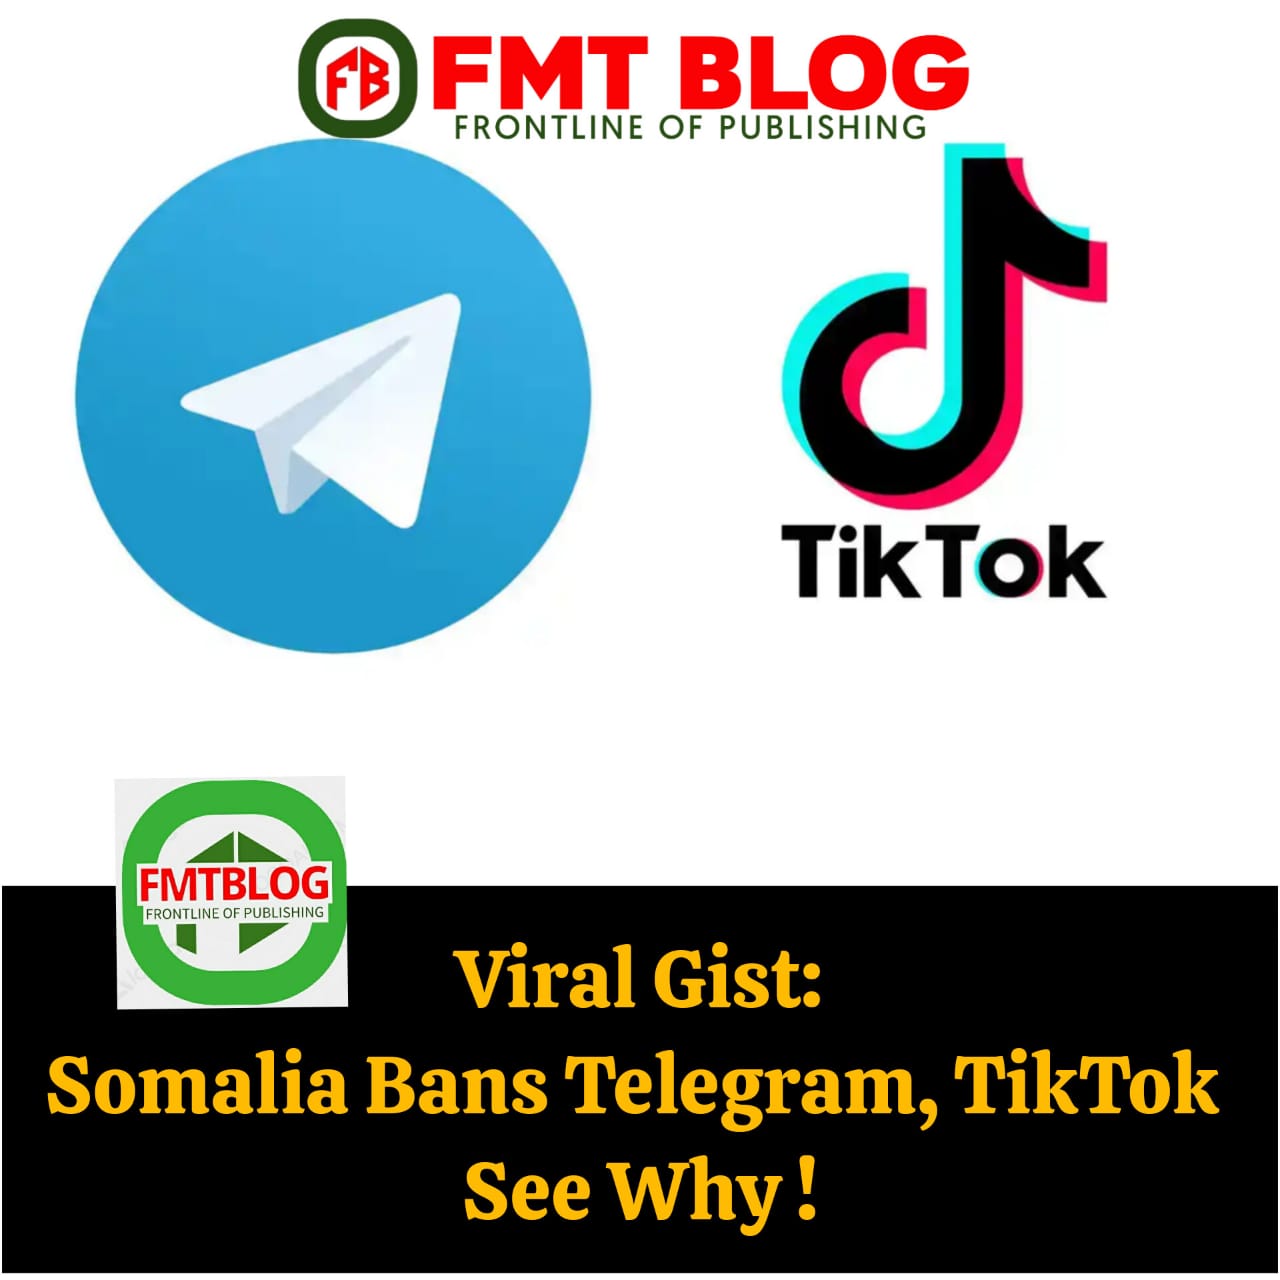 Somalia Bans Telegram, TikTok. See Why!